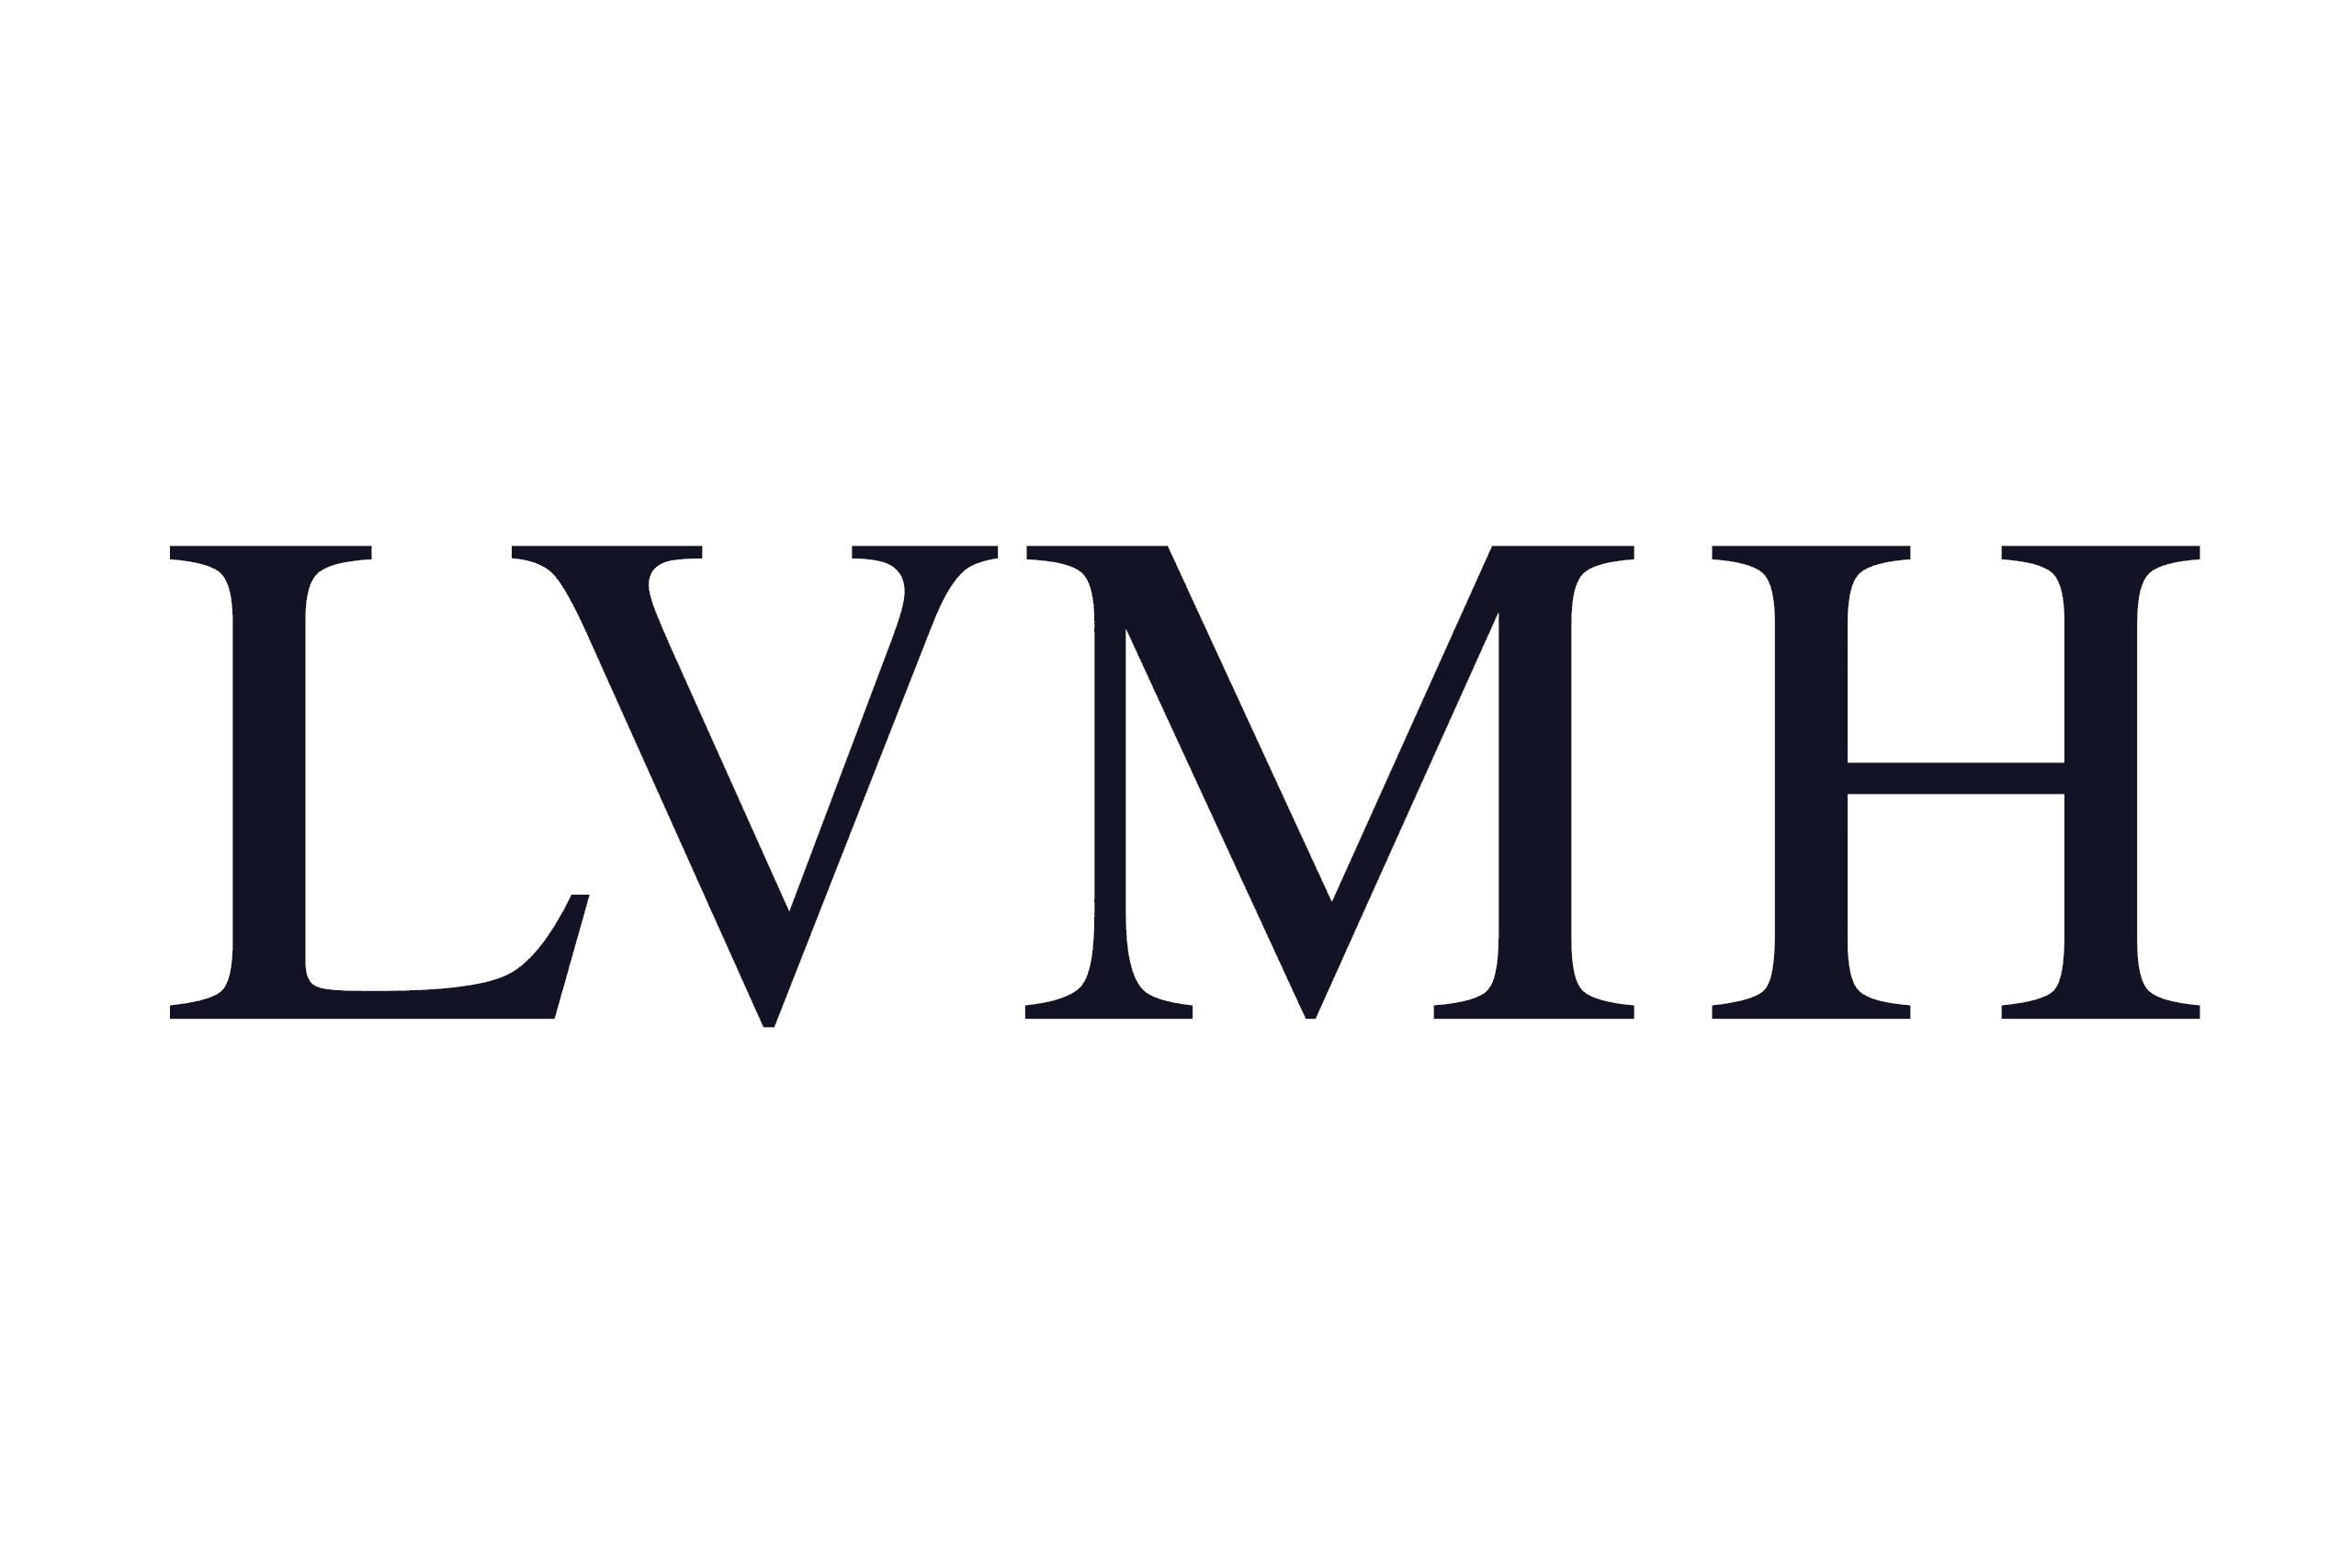 Job offers - Recruitment, career opportunities - LVMH group